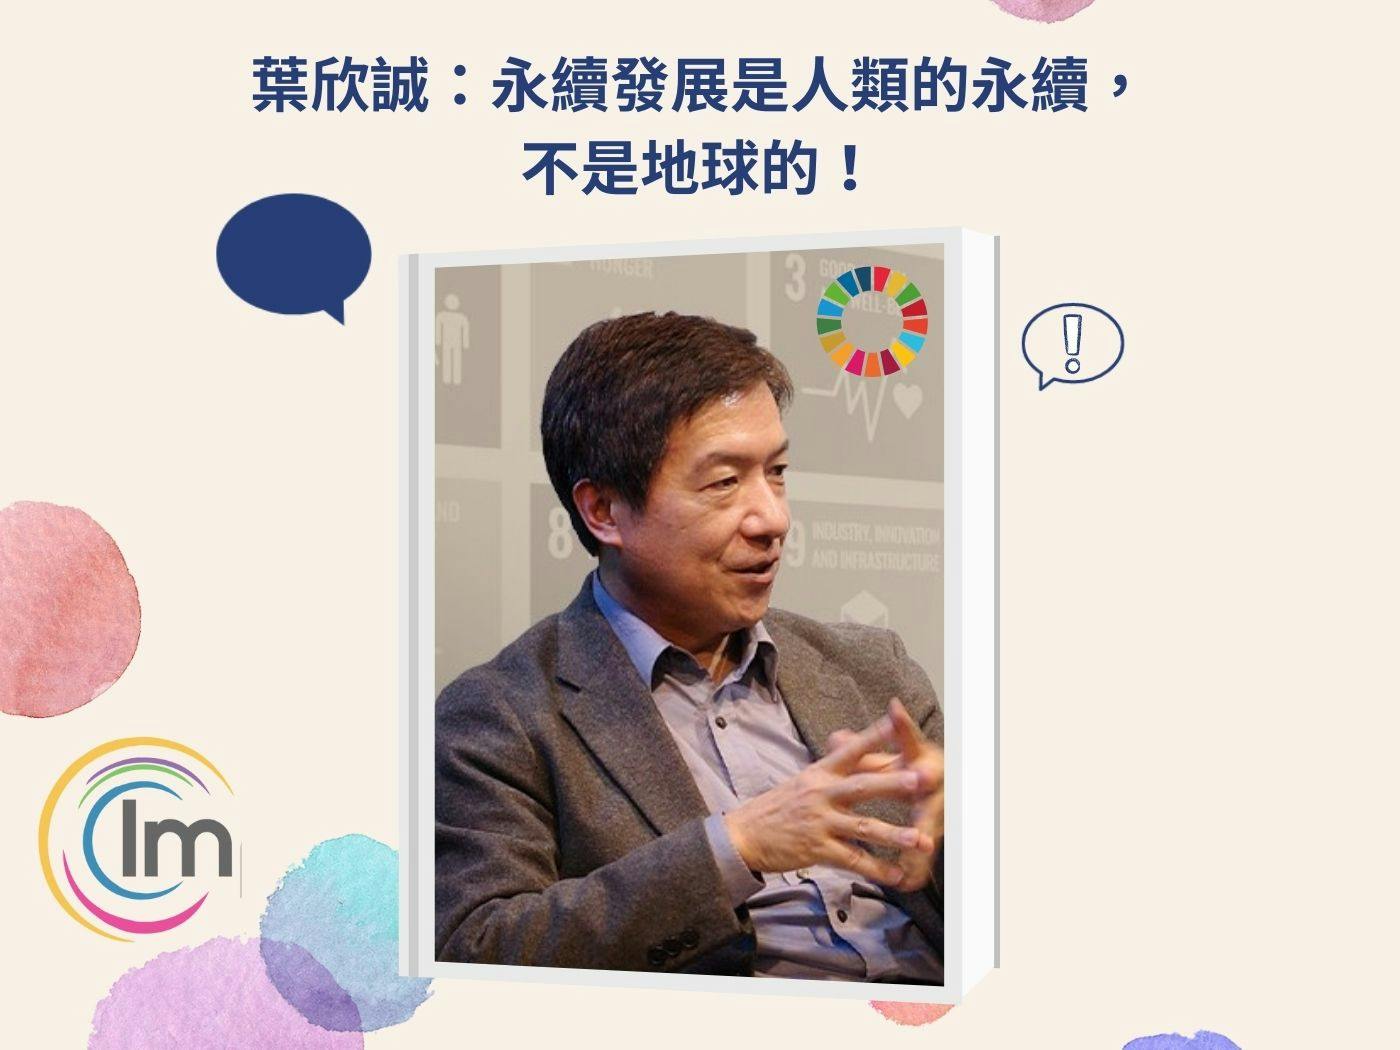 Impactio x 華藝數位 共同採訪葉欣誠教授